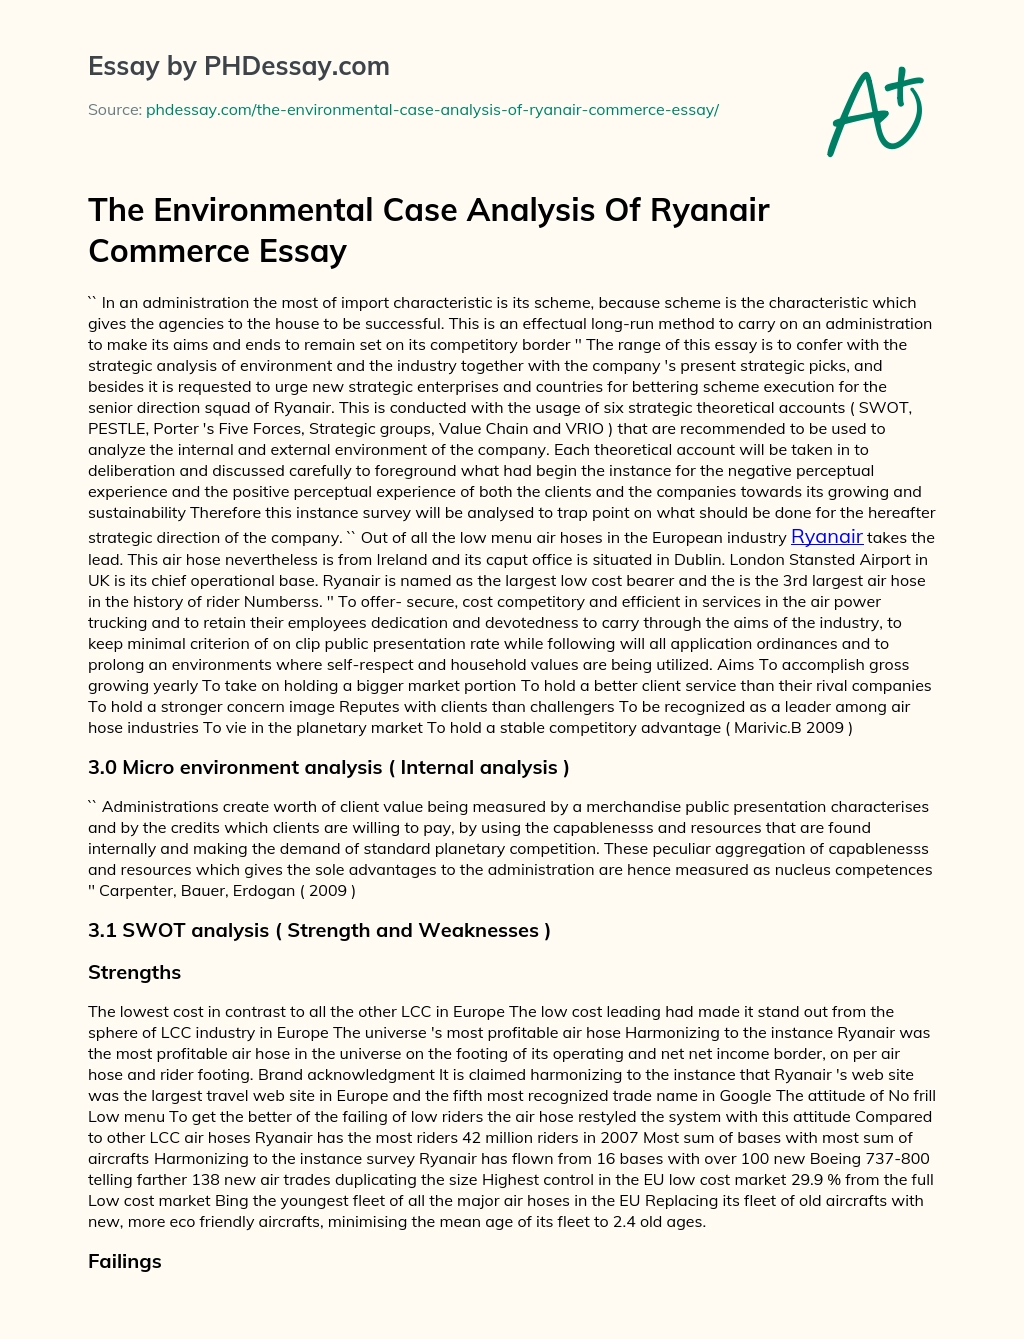 The Environmental Case Analysis Of Ryanair Commerce Essay essay